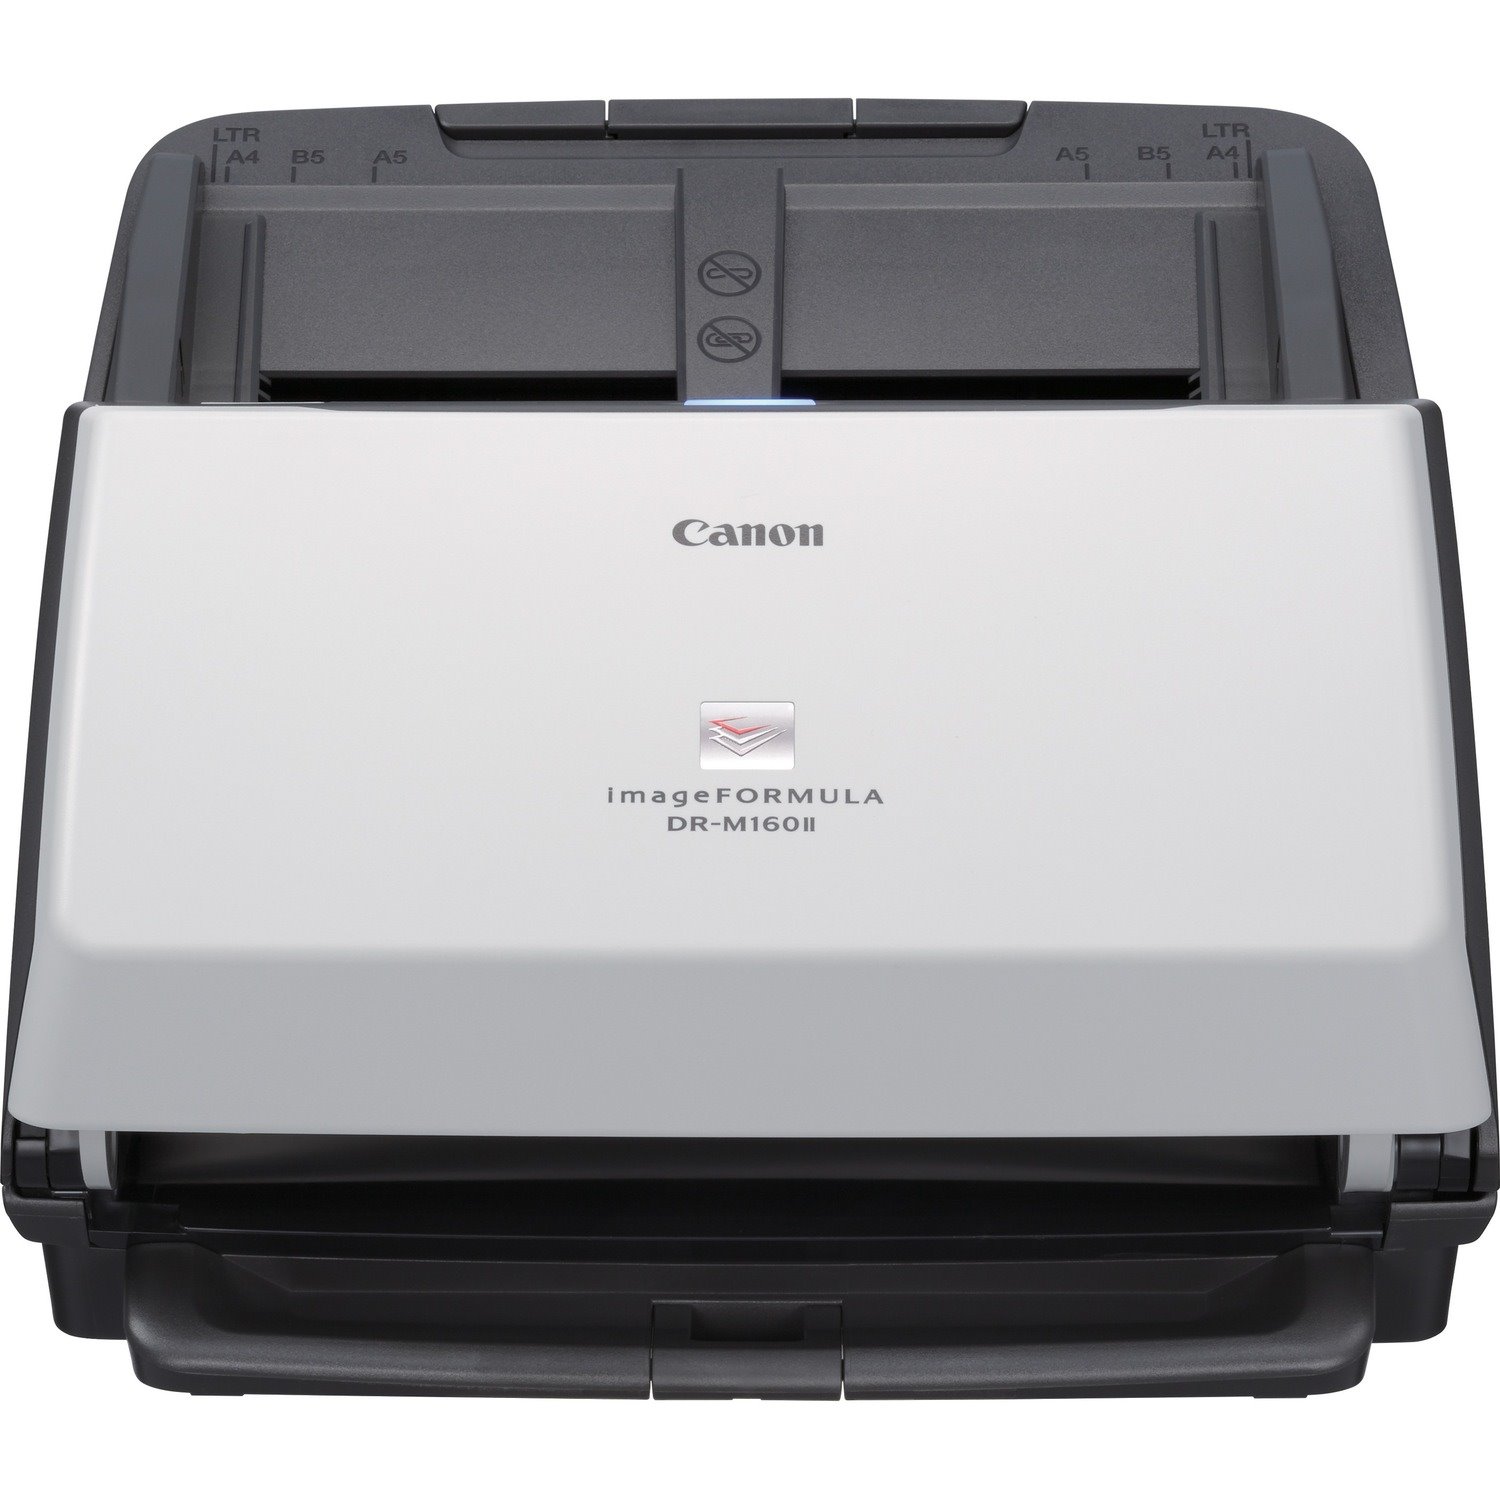 Canon imageFORMULA DR-M160ii High Speed Document Scanner